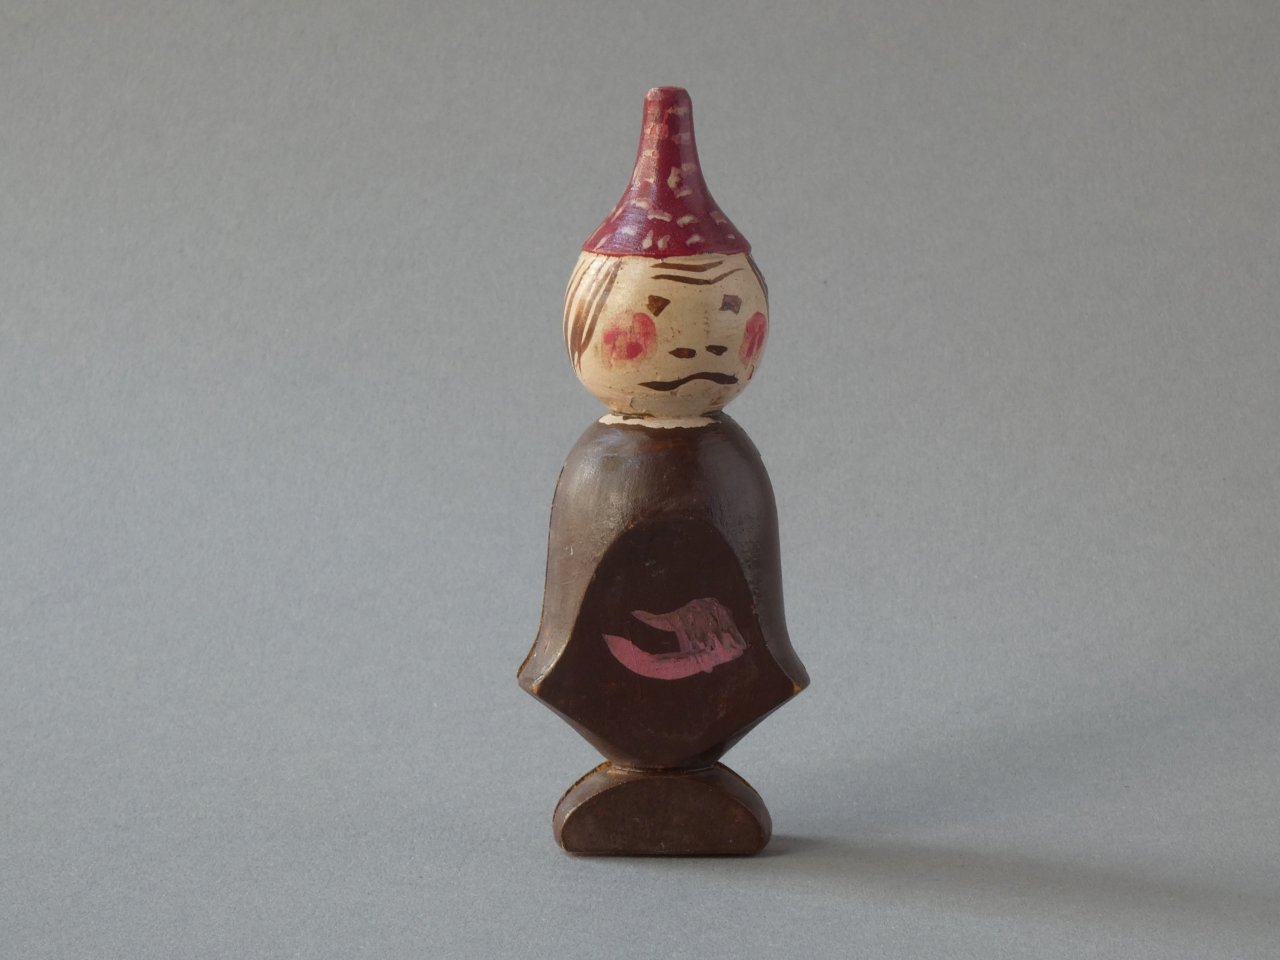 Klammerling kleiner Chinese mit roter Kopfbedeckung (Hugo Kükelhaus Gesellschaft e.V. CC BY-NC-SA)